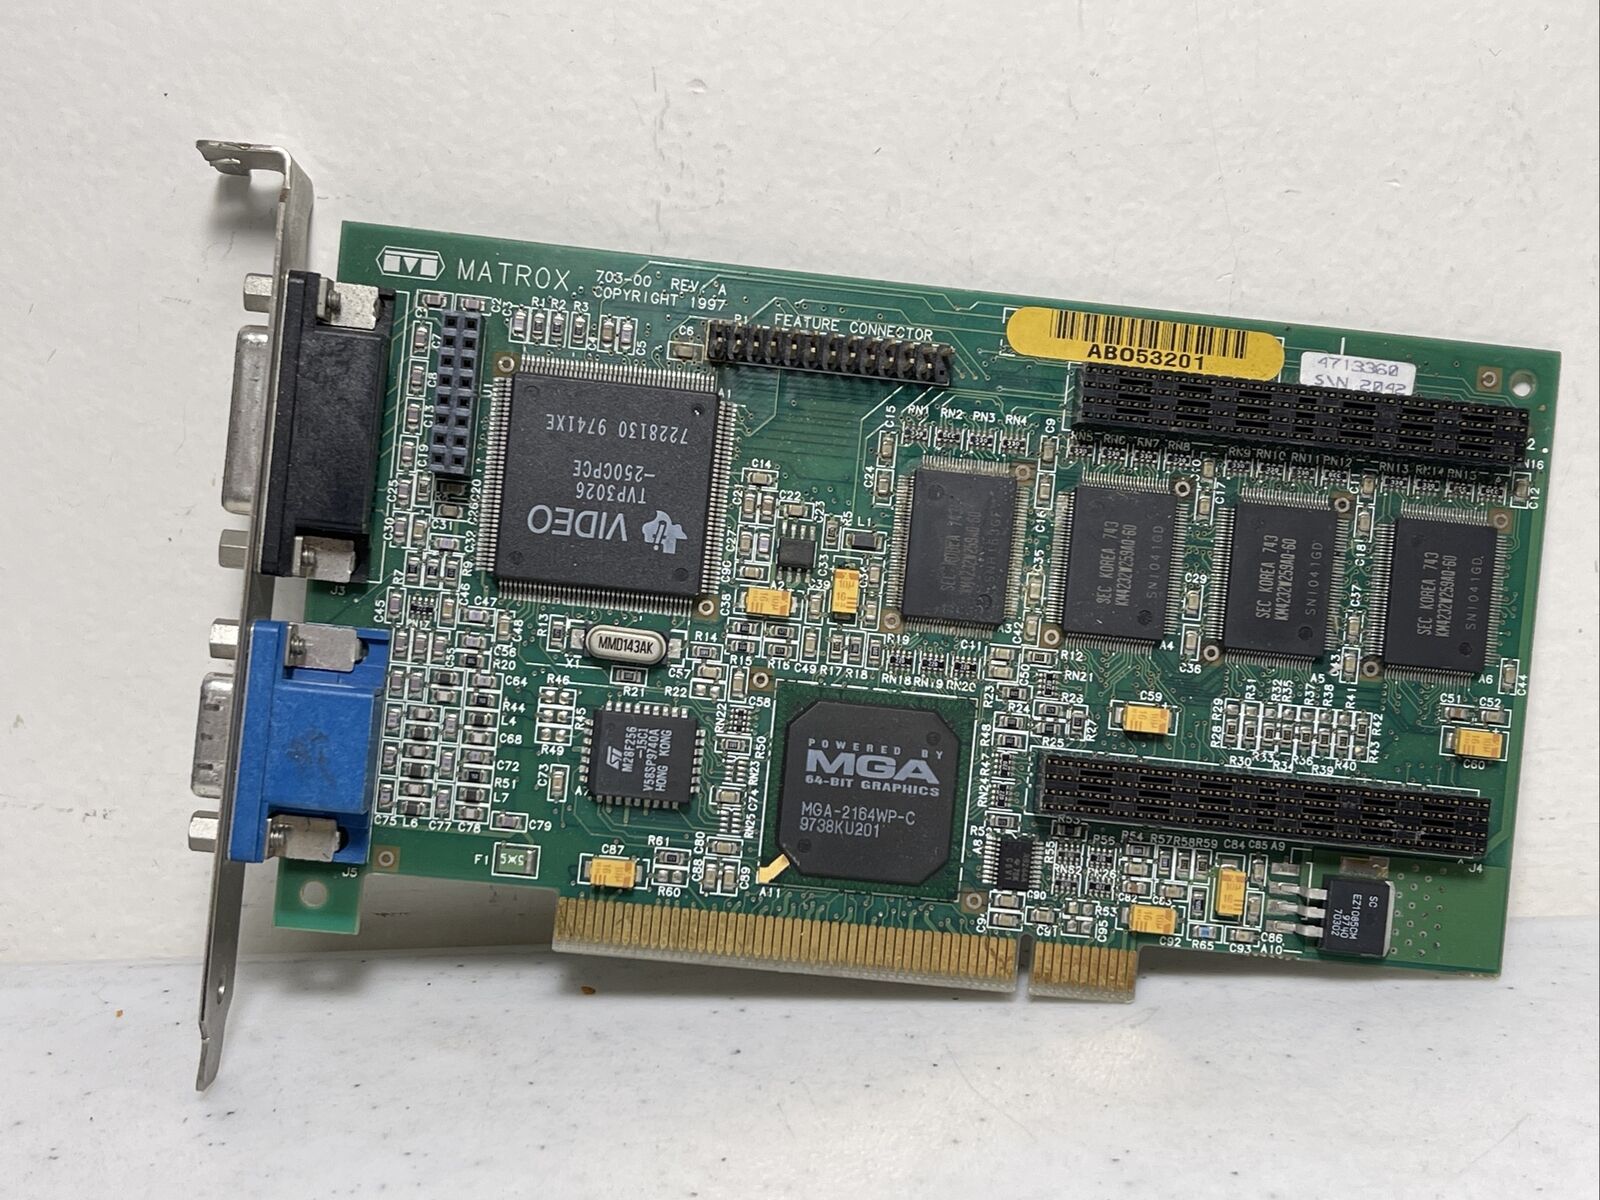 Maxtrox MIL2P/8N 8MB PCI Video Graphics Card 703-00 REV A MGA-2164WP-C